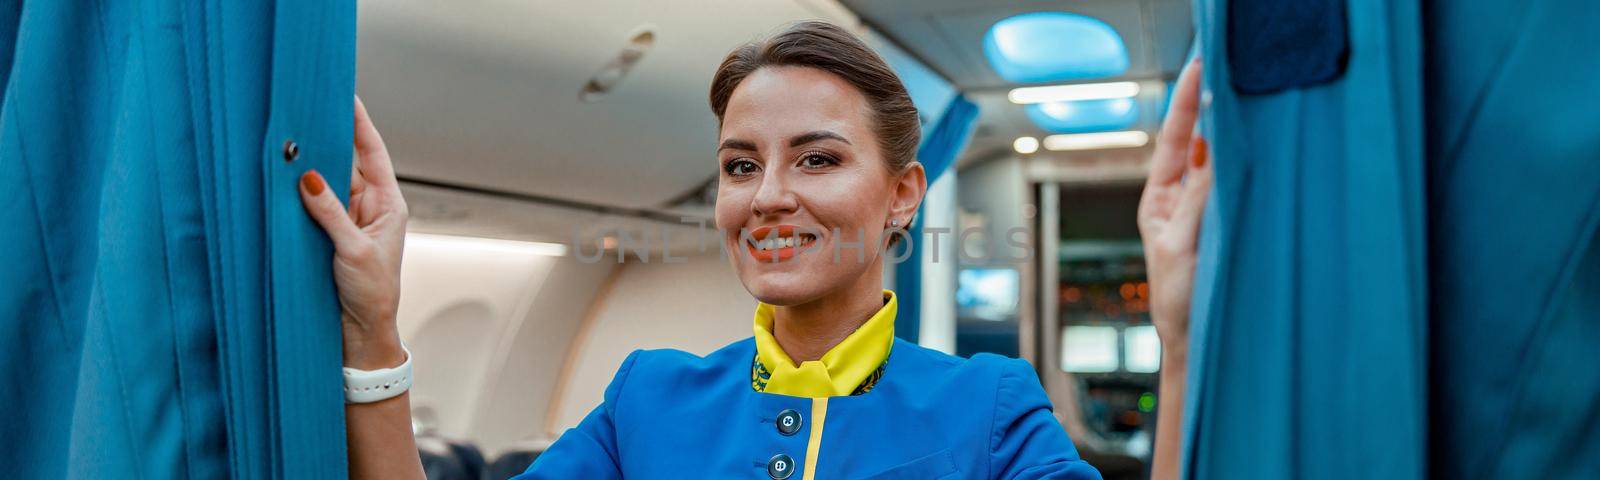 Joyful woman stewardess holding curtains in airplane by Yaroslav_astakhov